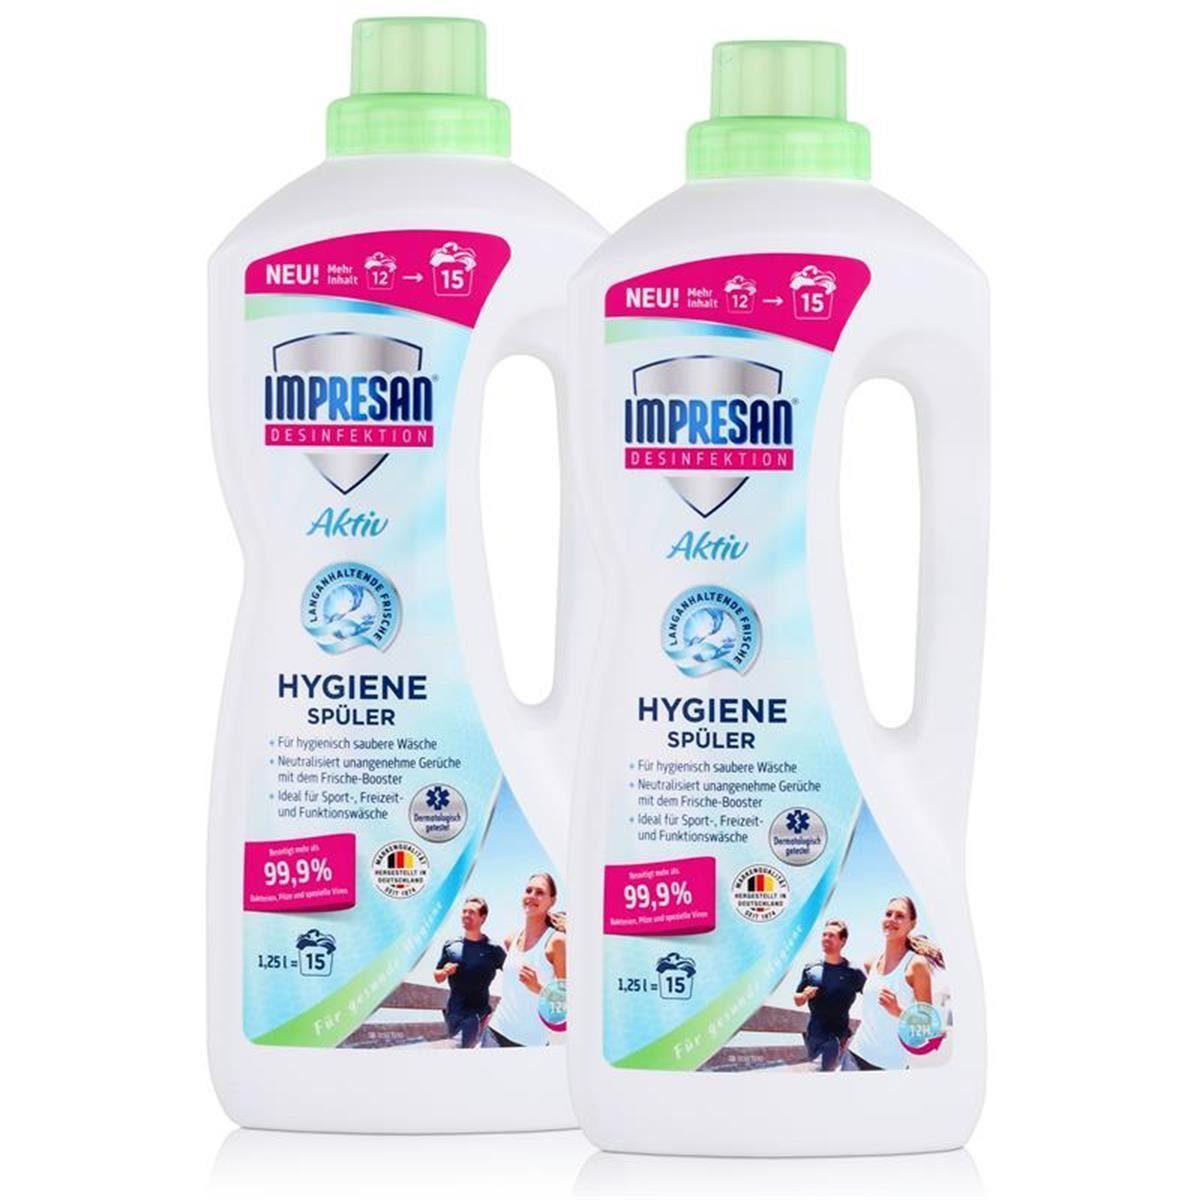 IMPRESAN Impresan Desinfektion Aktiv Hygienespüler 1,25L - Ideal für Sportwäsch Spezialwaschmittel